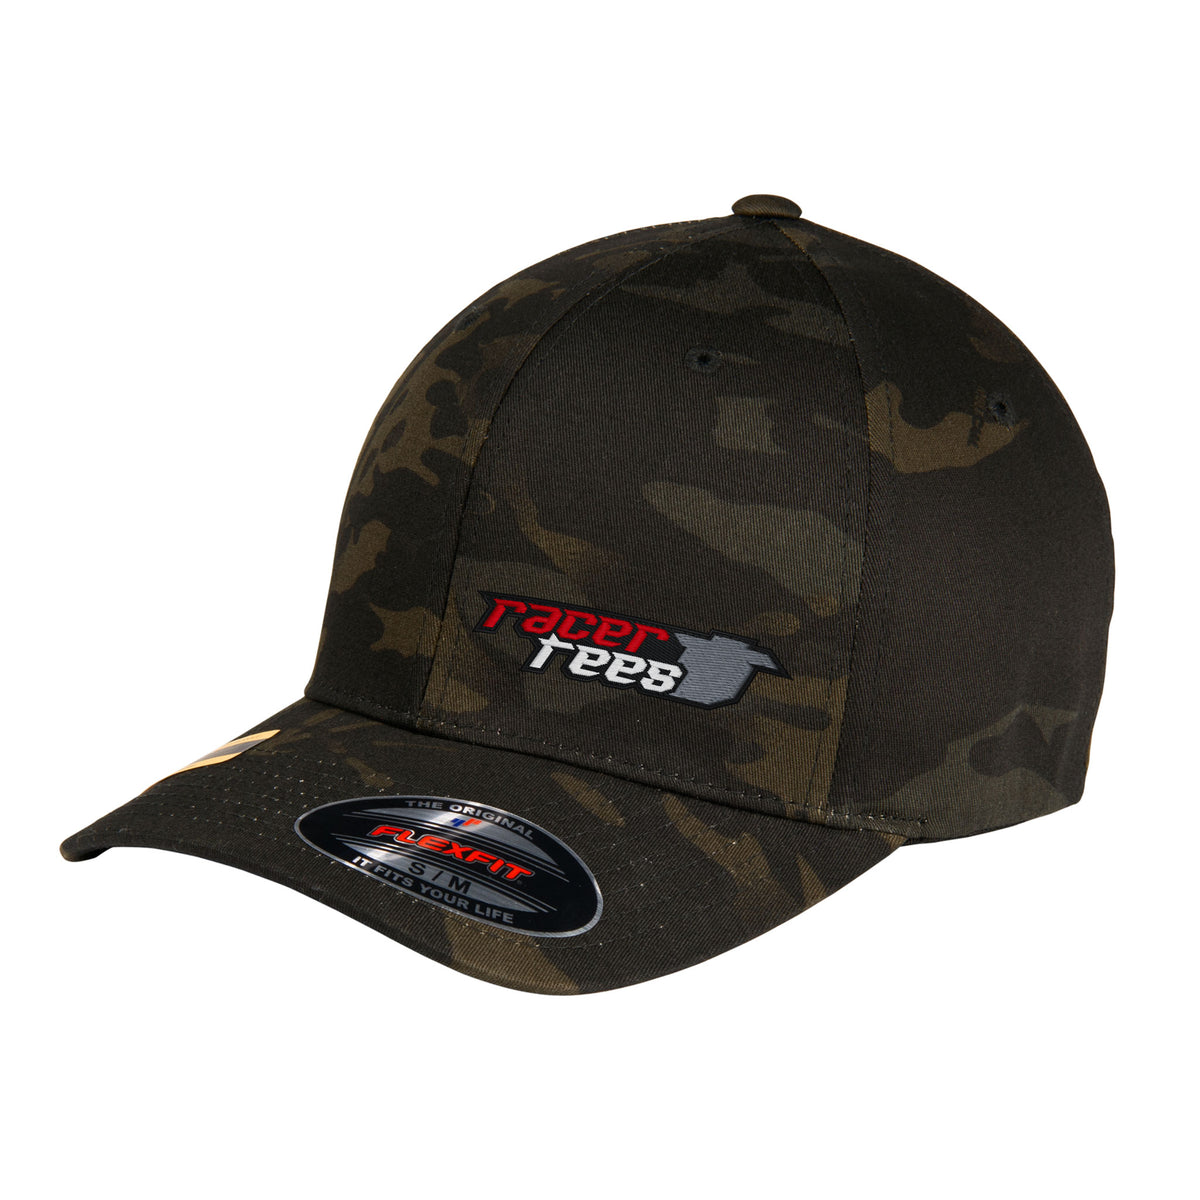 Racer Tees Flexfit Hat | Multicam Black